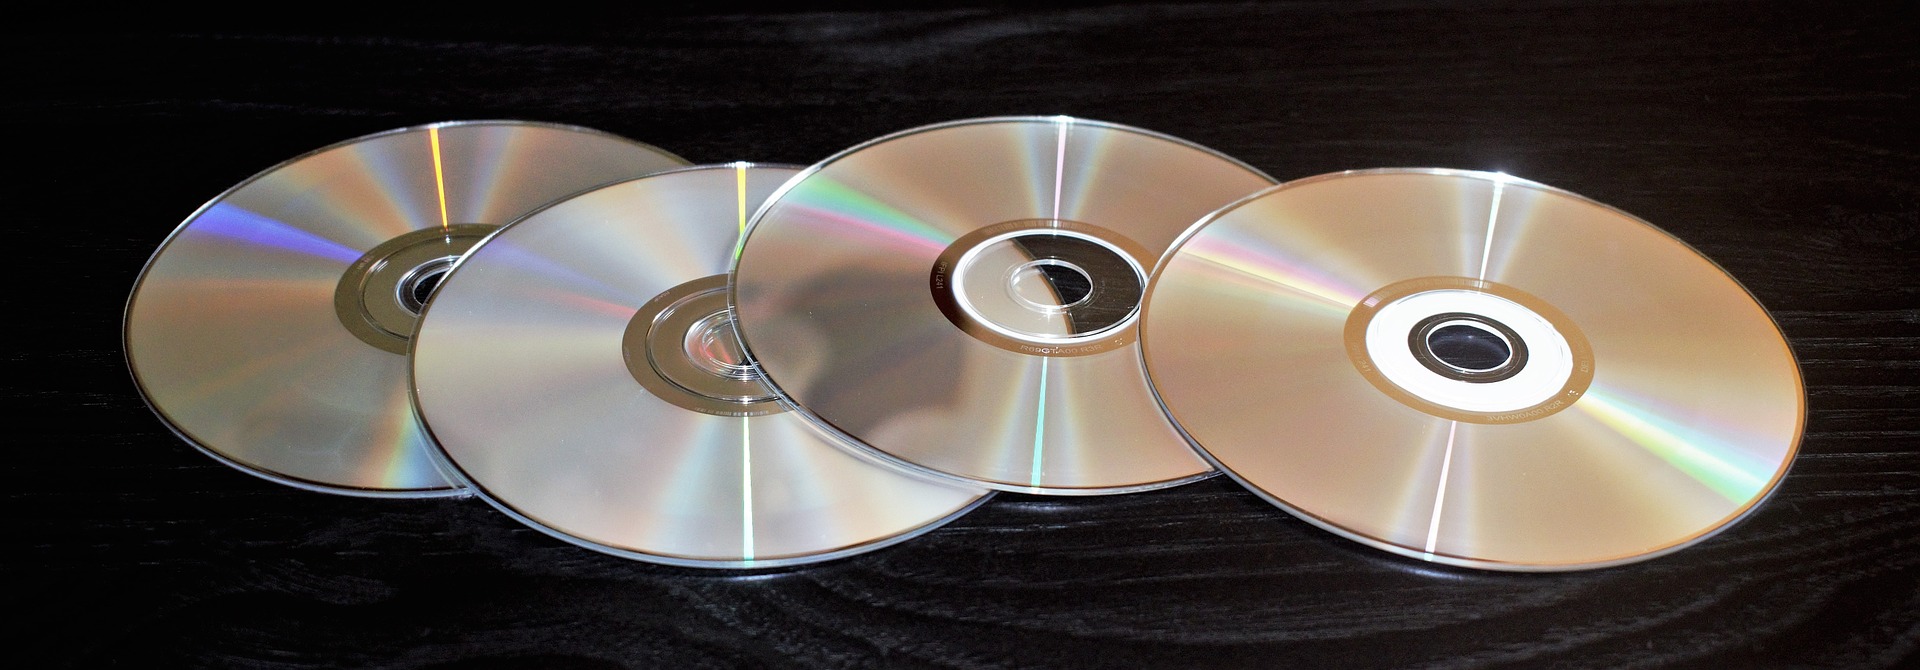 Disquets i CD-ROM